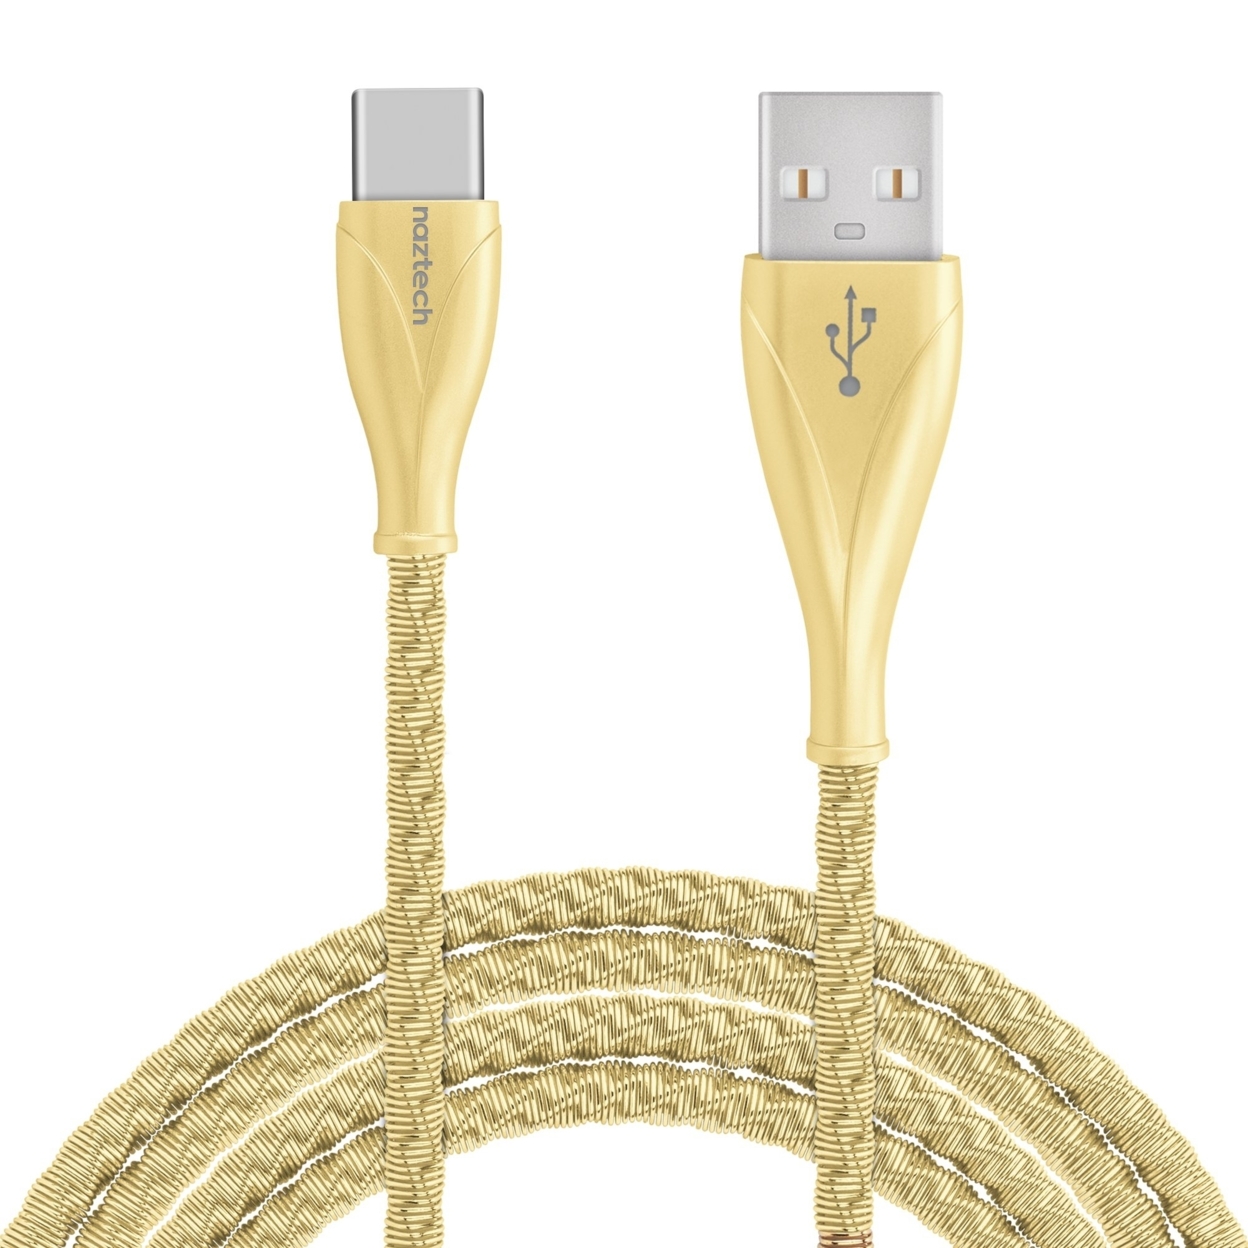 Naztech Elite Series USB-C To USB-A Metal Cable 4ft (ELITEUSB-PRNT) - Gold